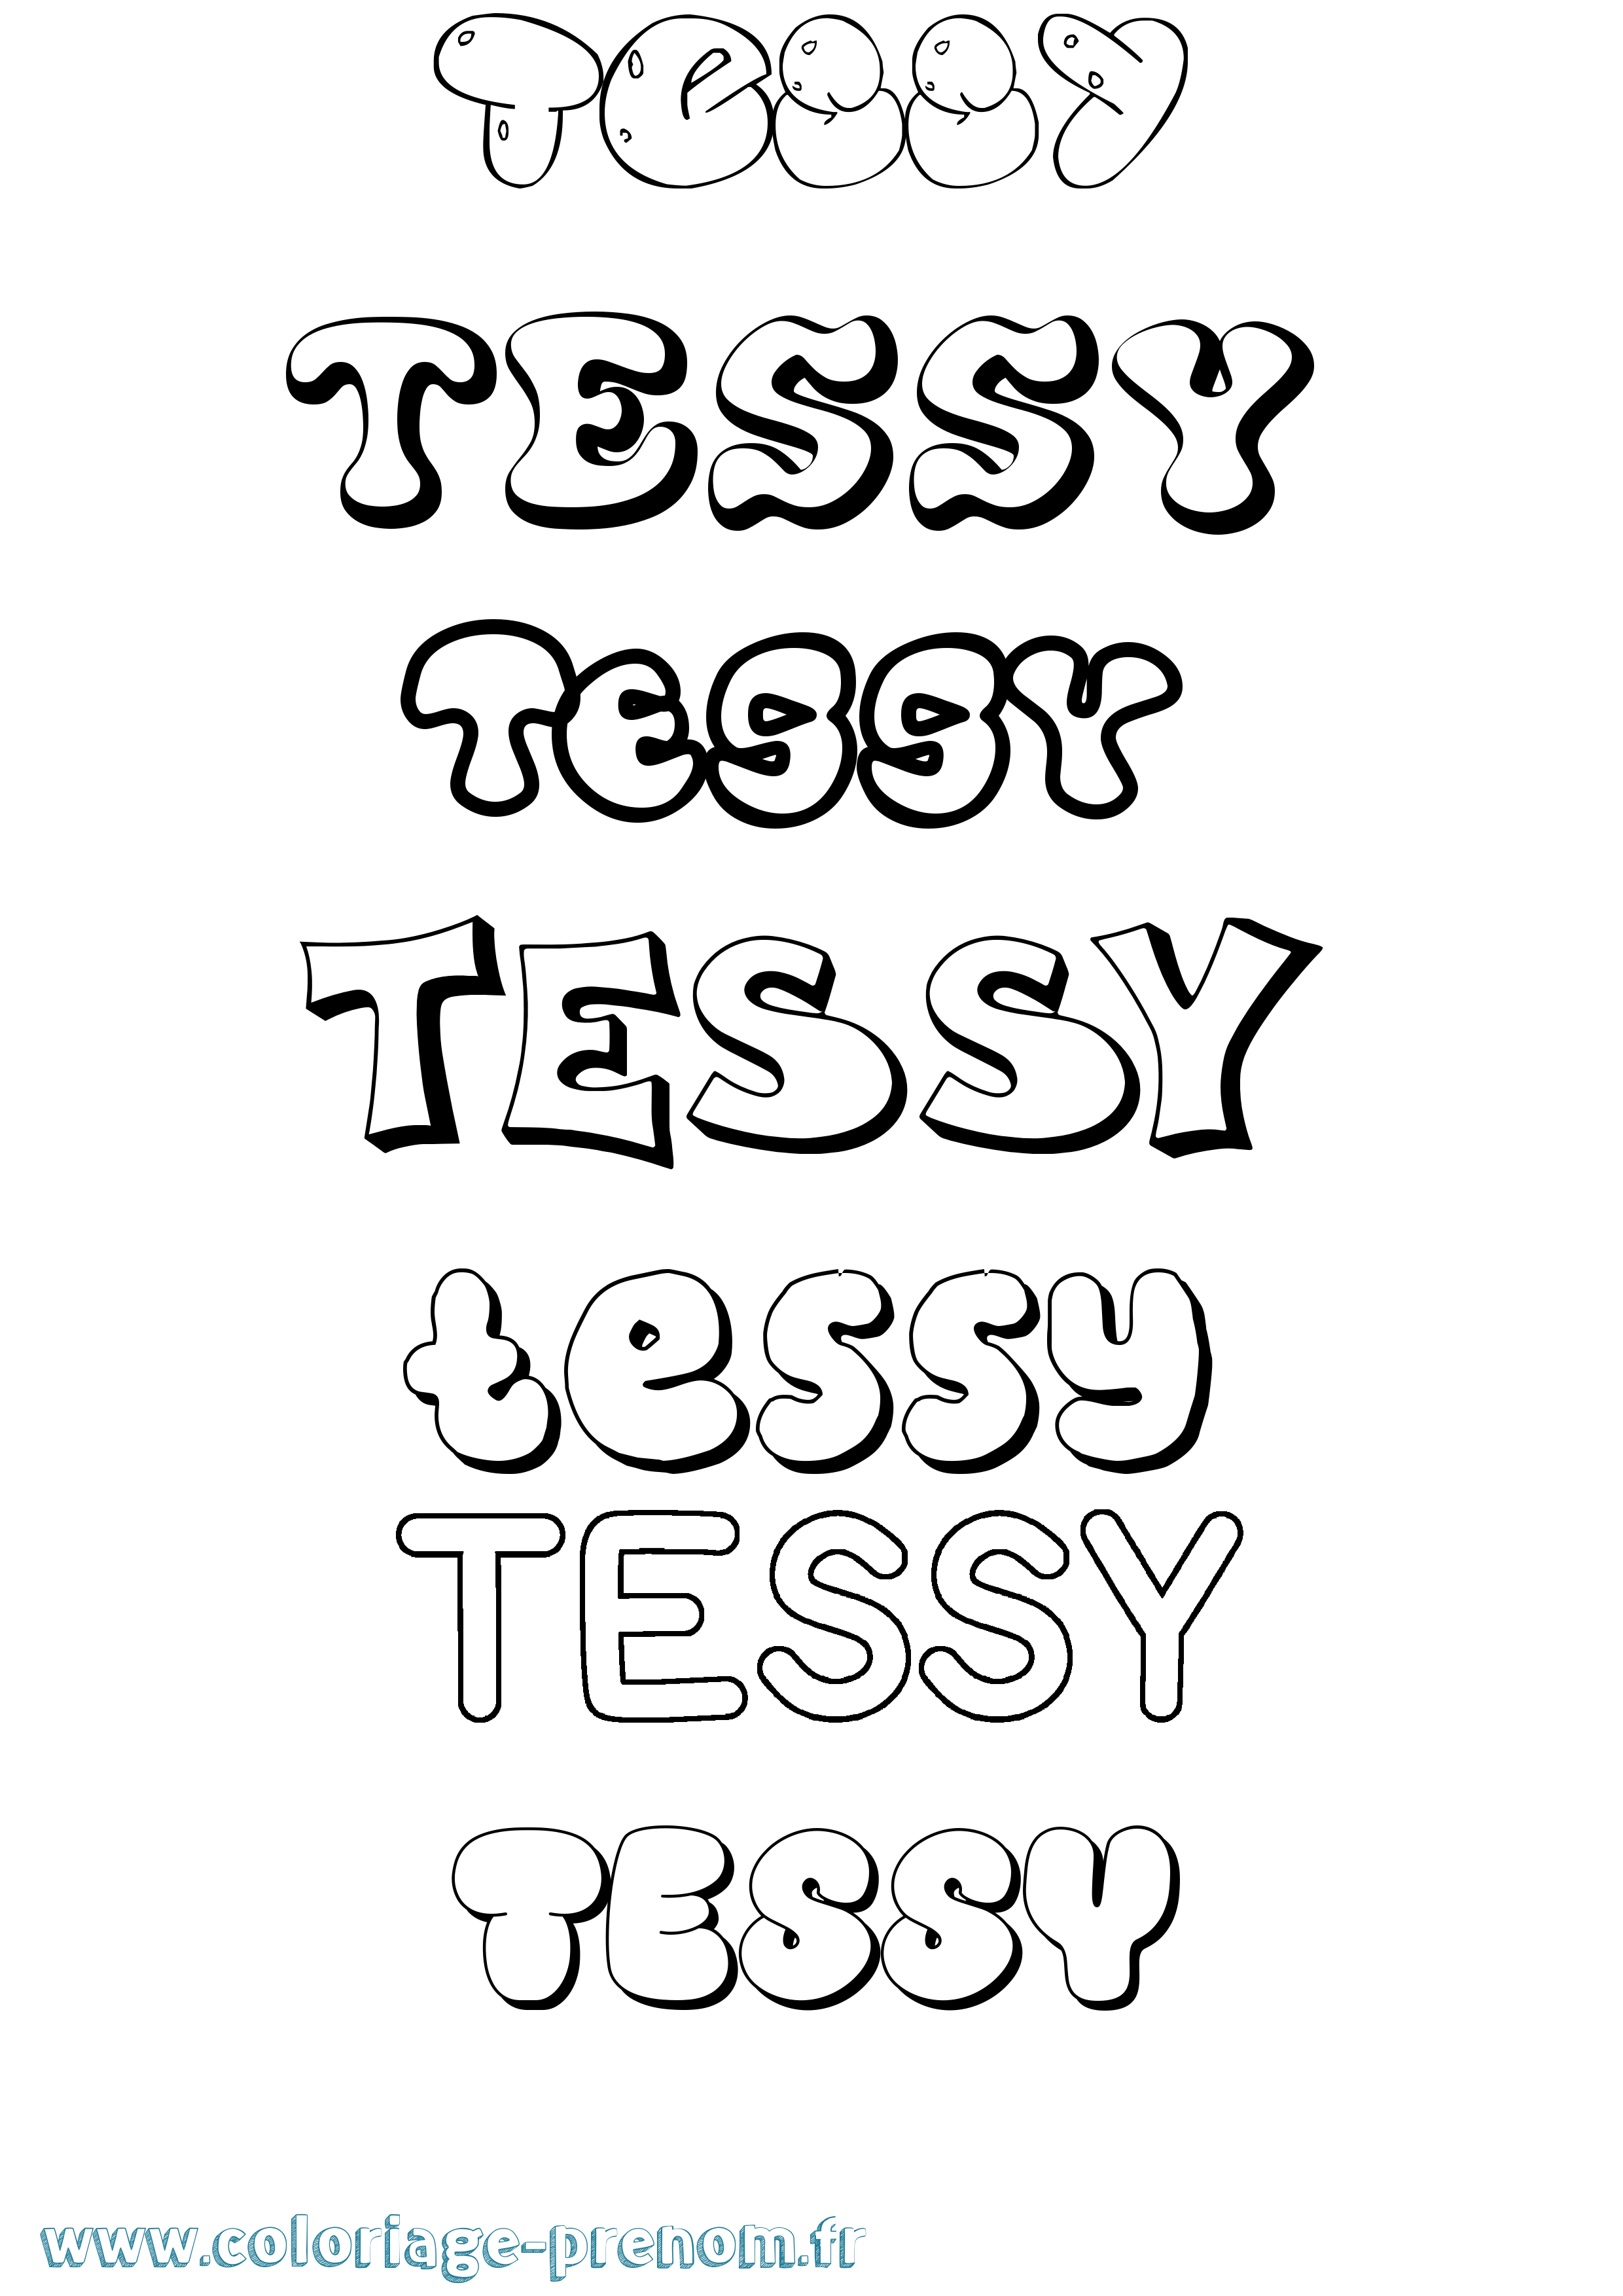 Coloriage prénom Tessy Bubble